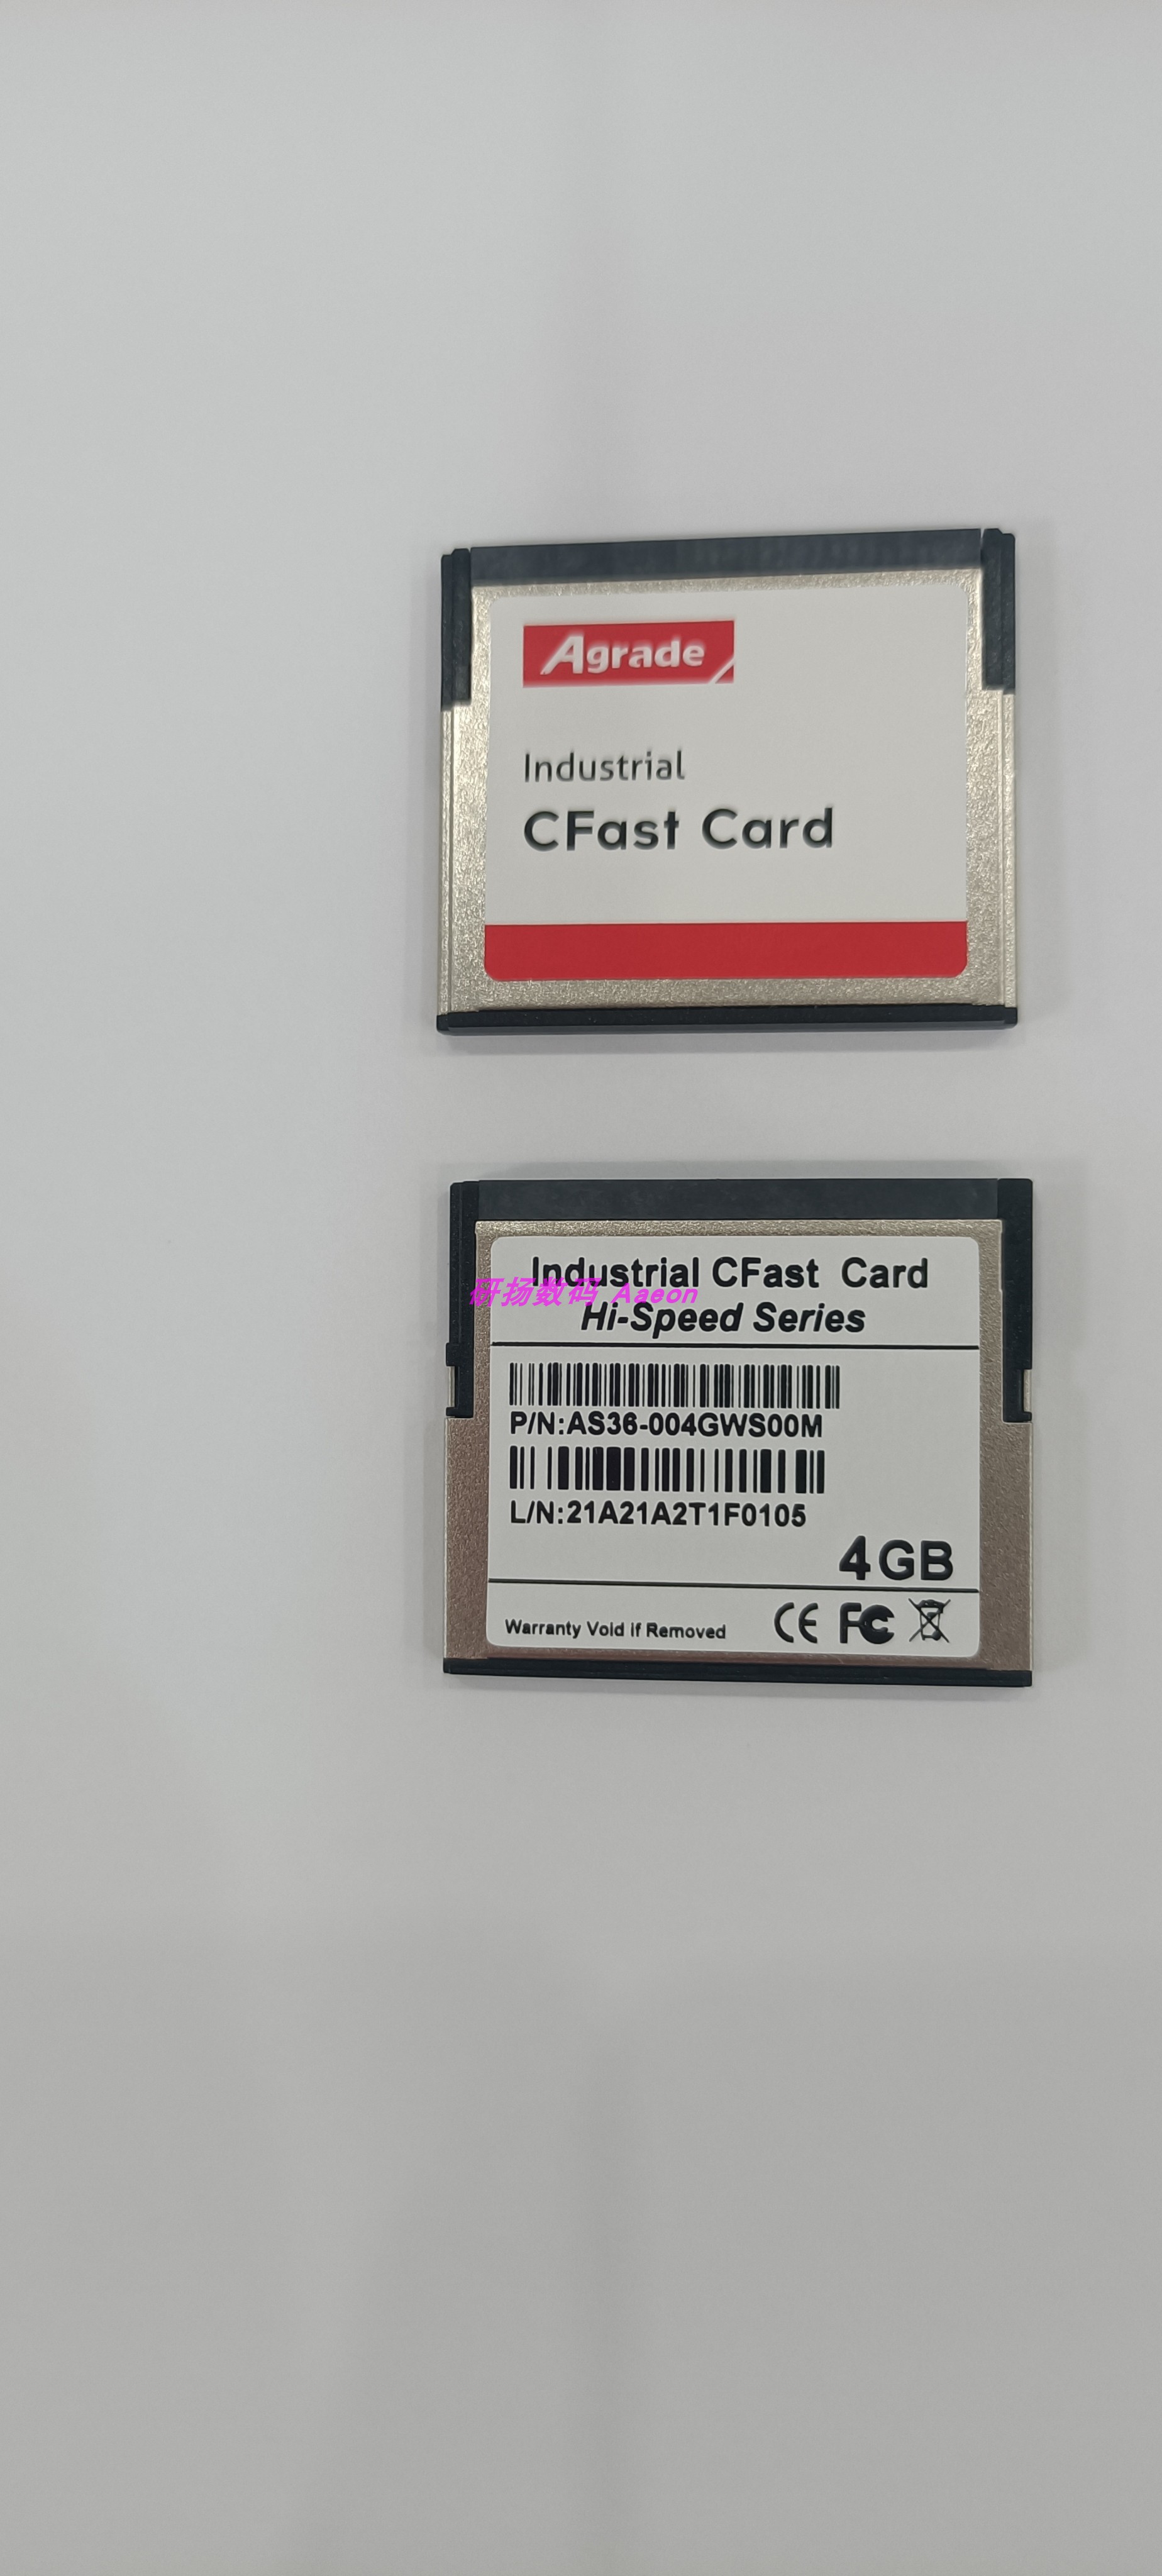 Agrade工业级CFast卡 4GB宽温MLC全新原装行货AS36-004GWS00M - 图0